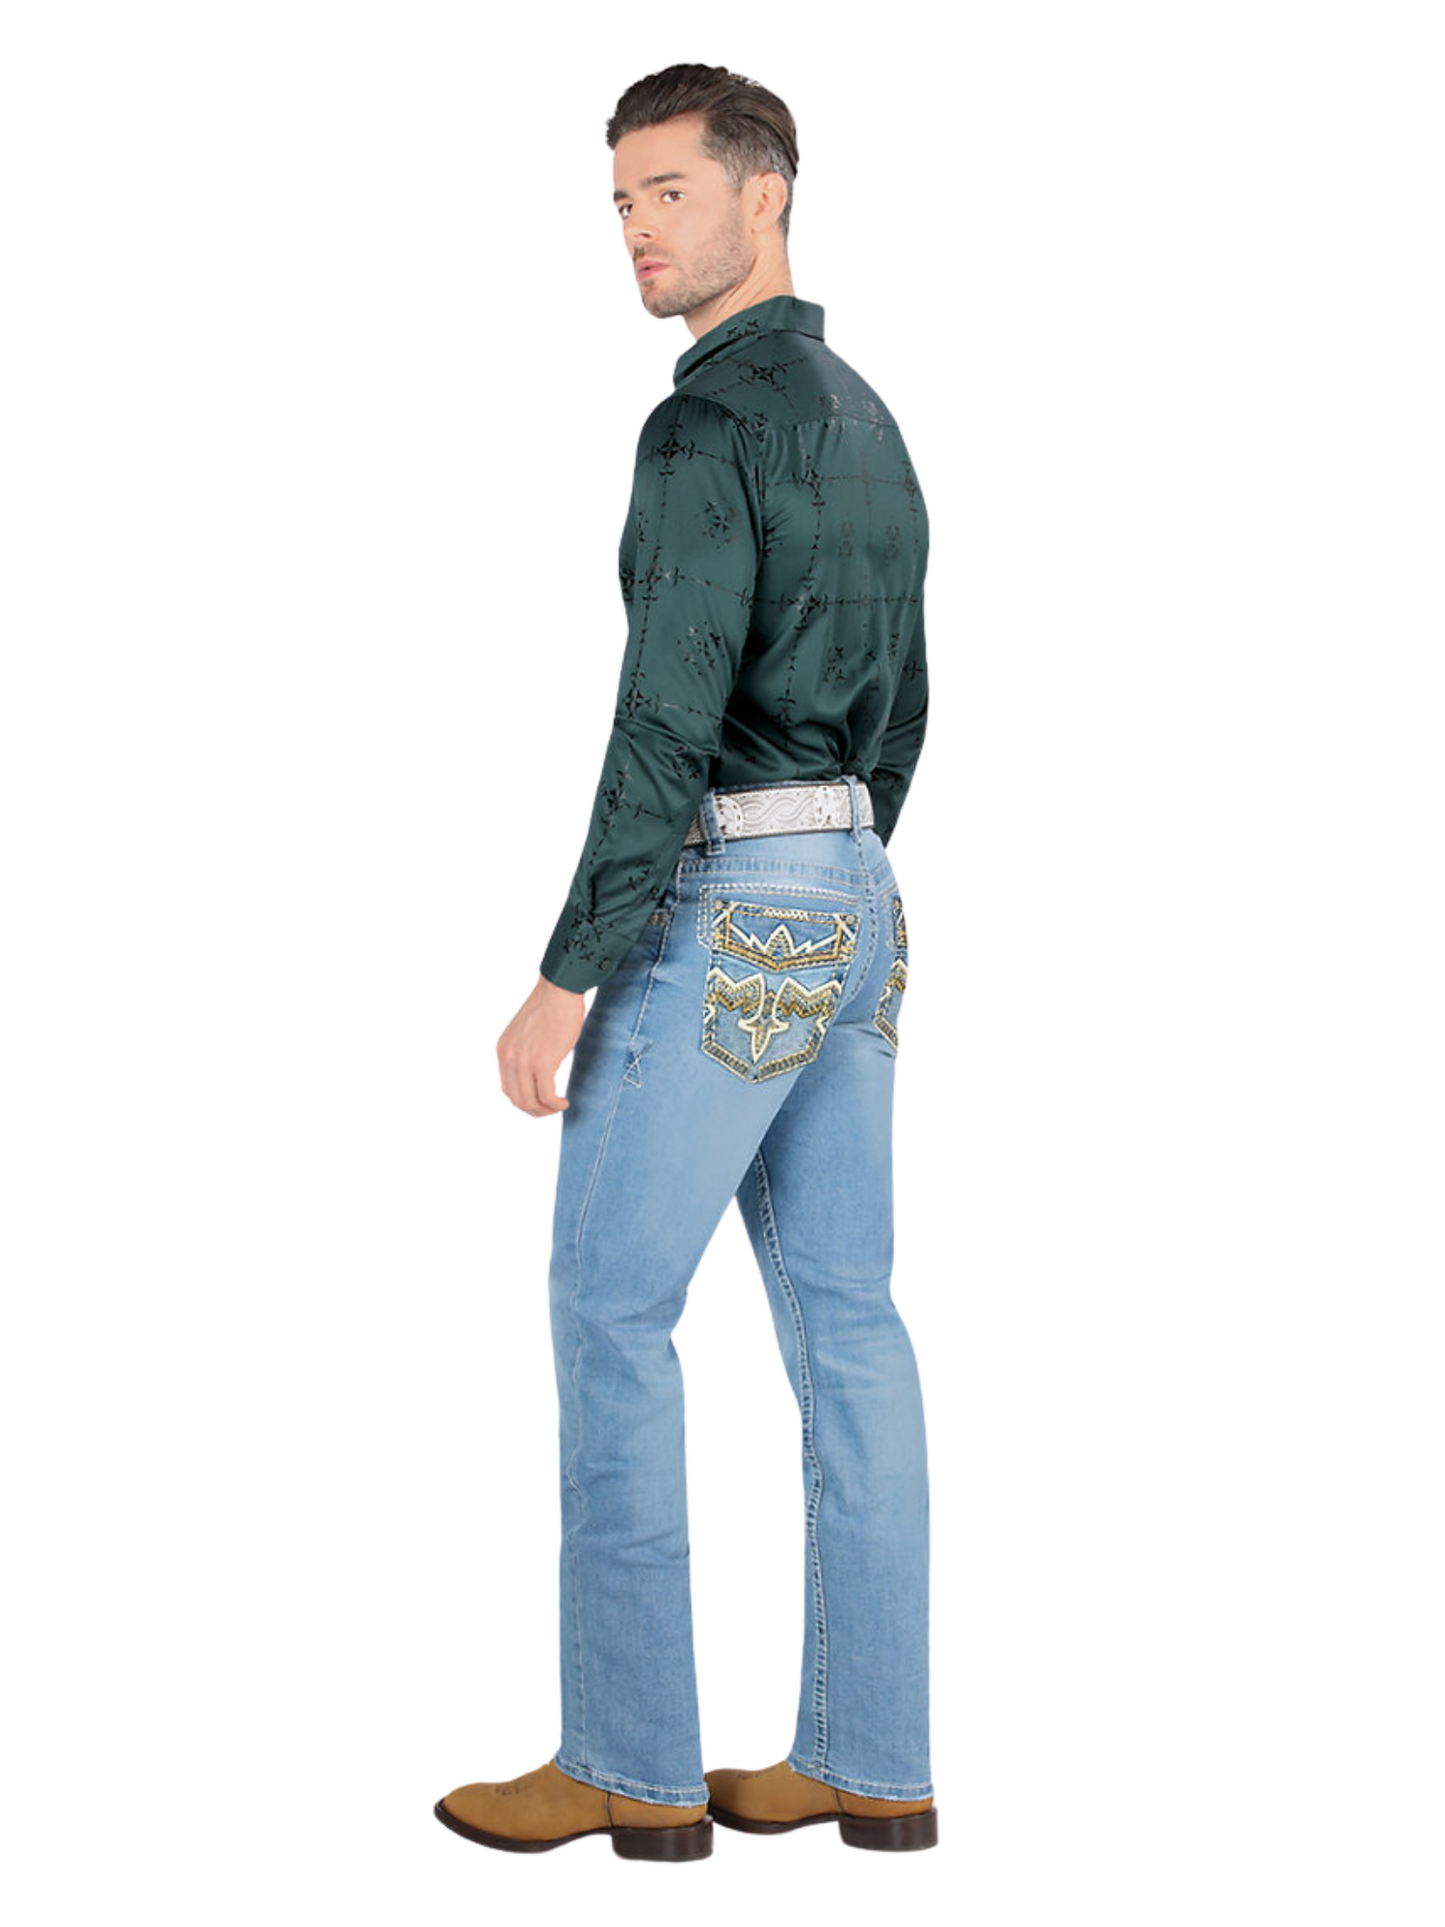 Stretch Denim Jeans for Men 'Montero' - ID: 4605 Denim Jeans Montero